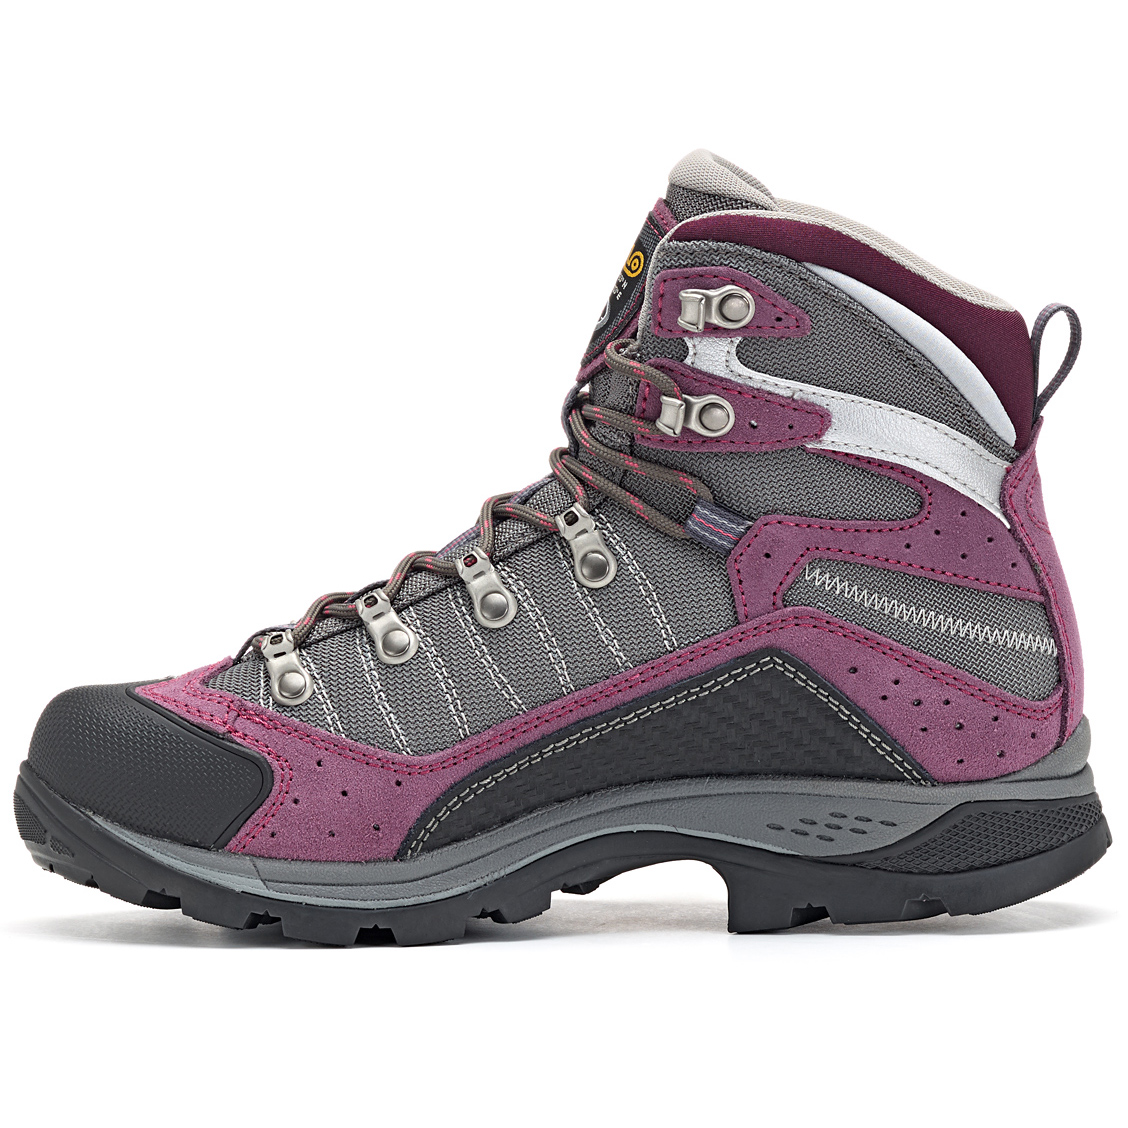 asolo women's hiking boots sale